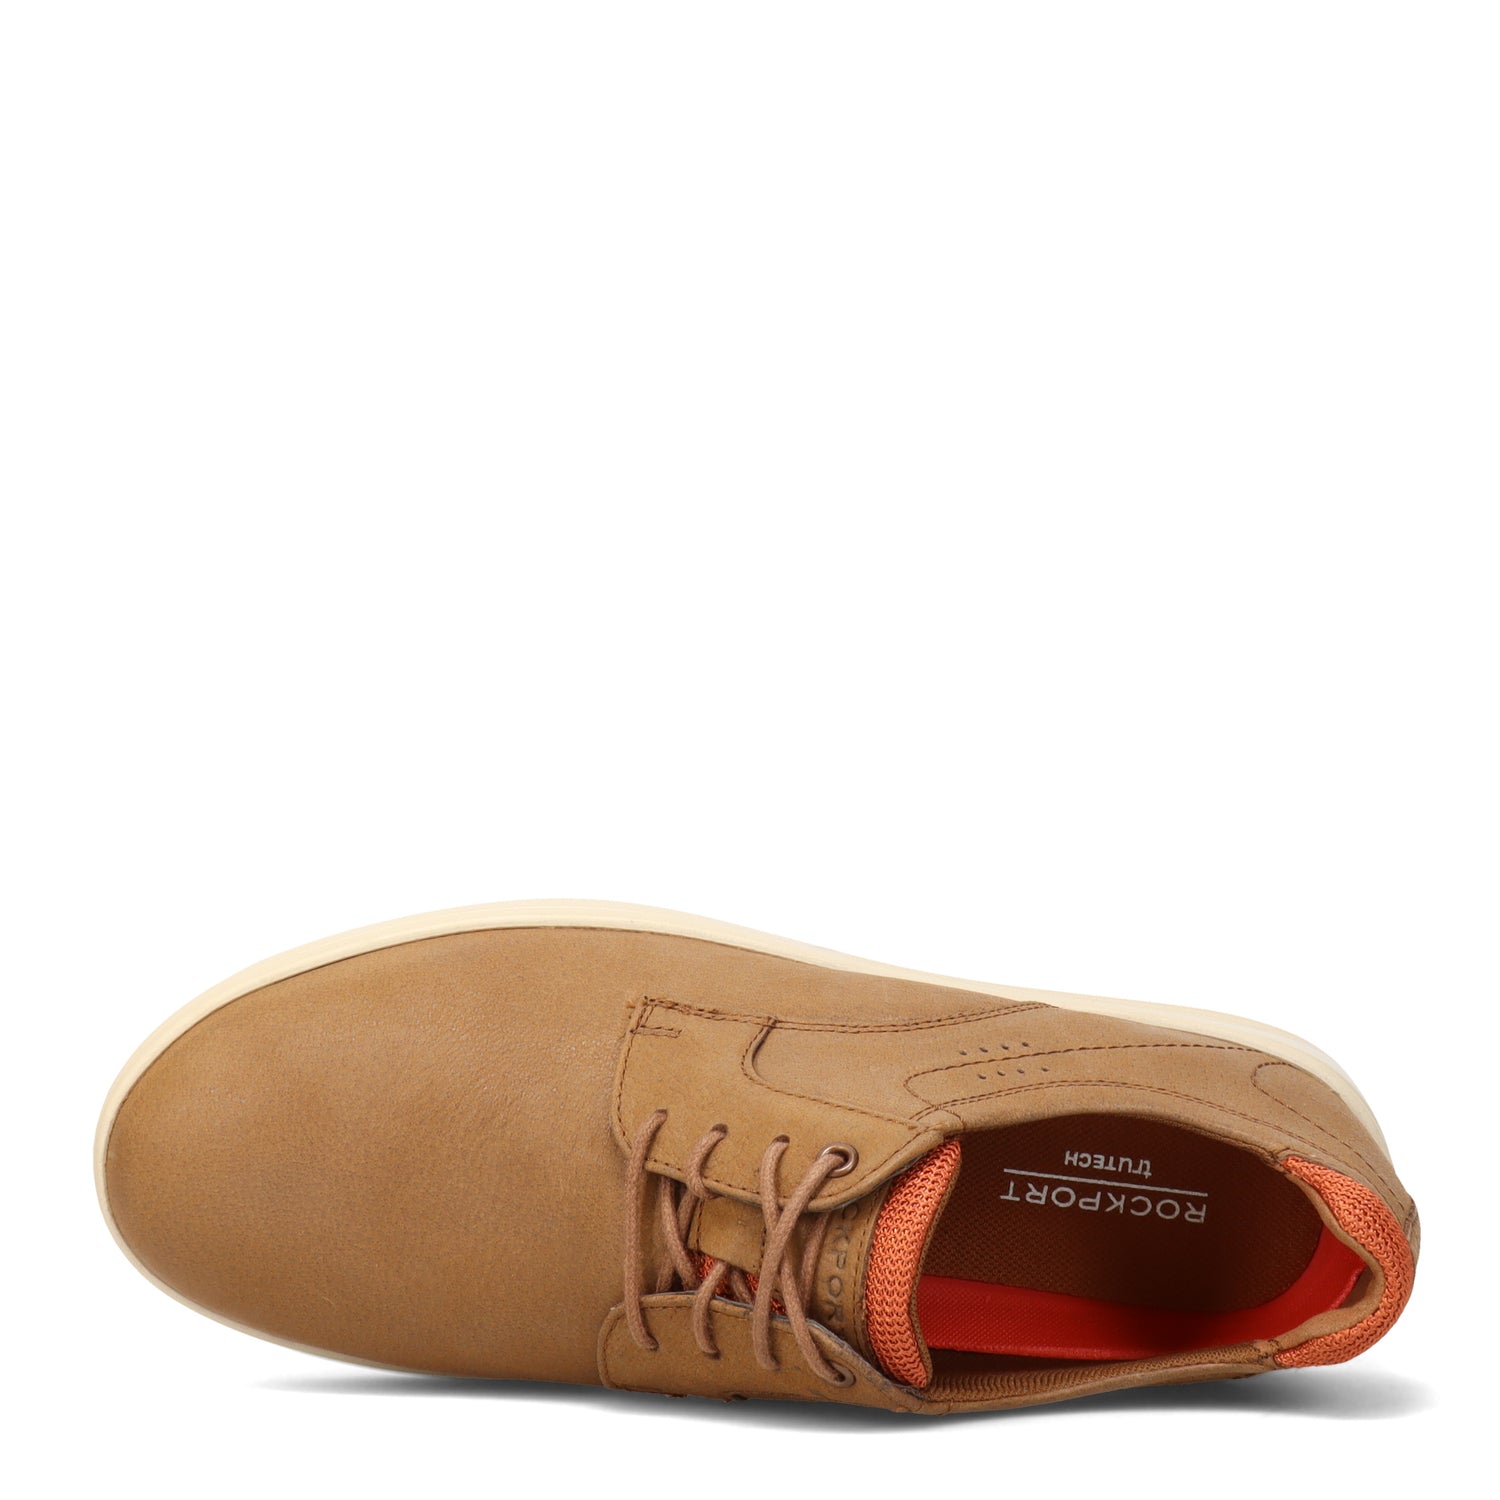 Peltz Shoes  Men's Rockport Caldwell Plain Toe Oxford DESERT CI6425